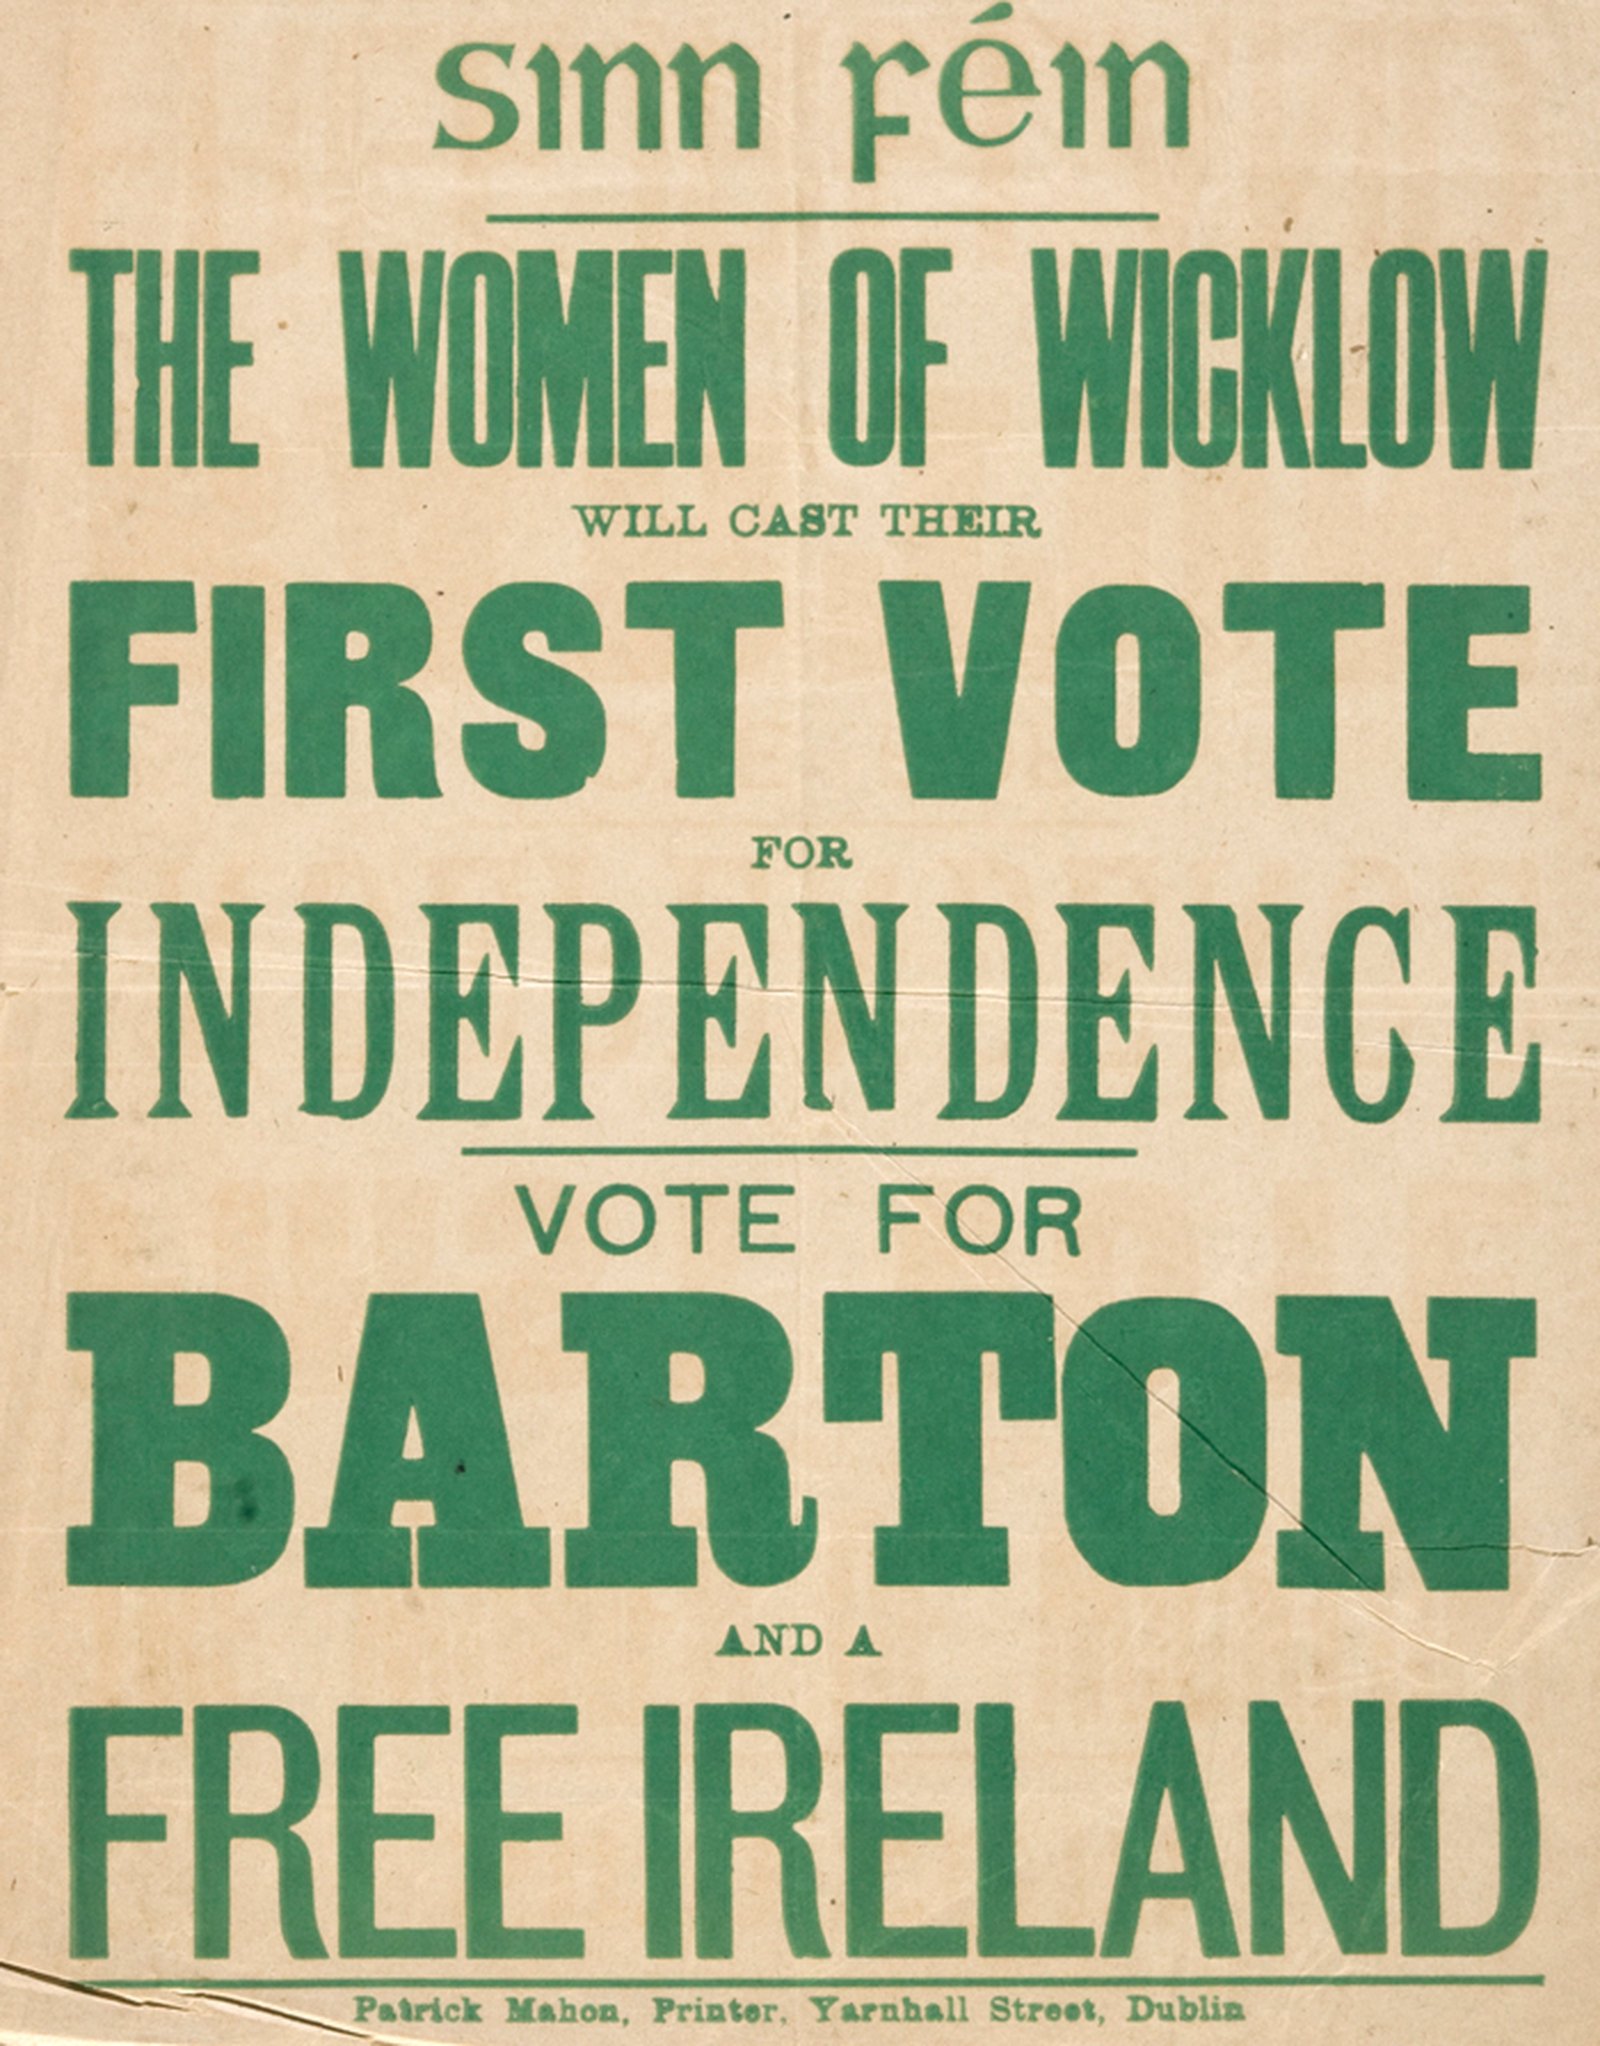 Image - A Sinn Féin poster for the 1918 election